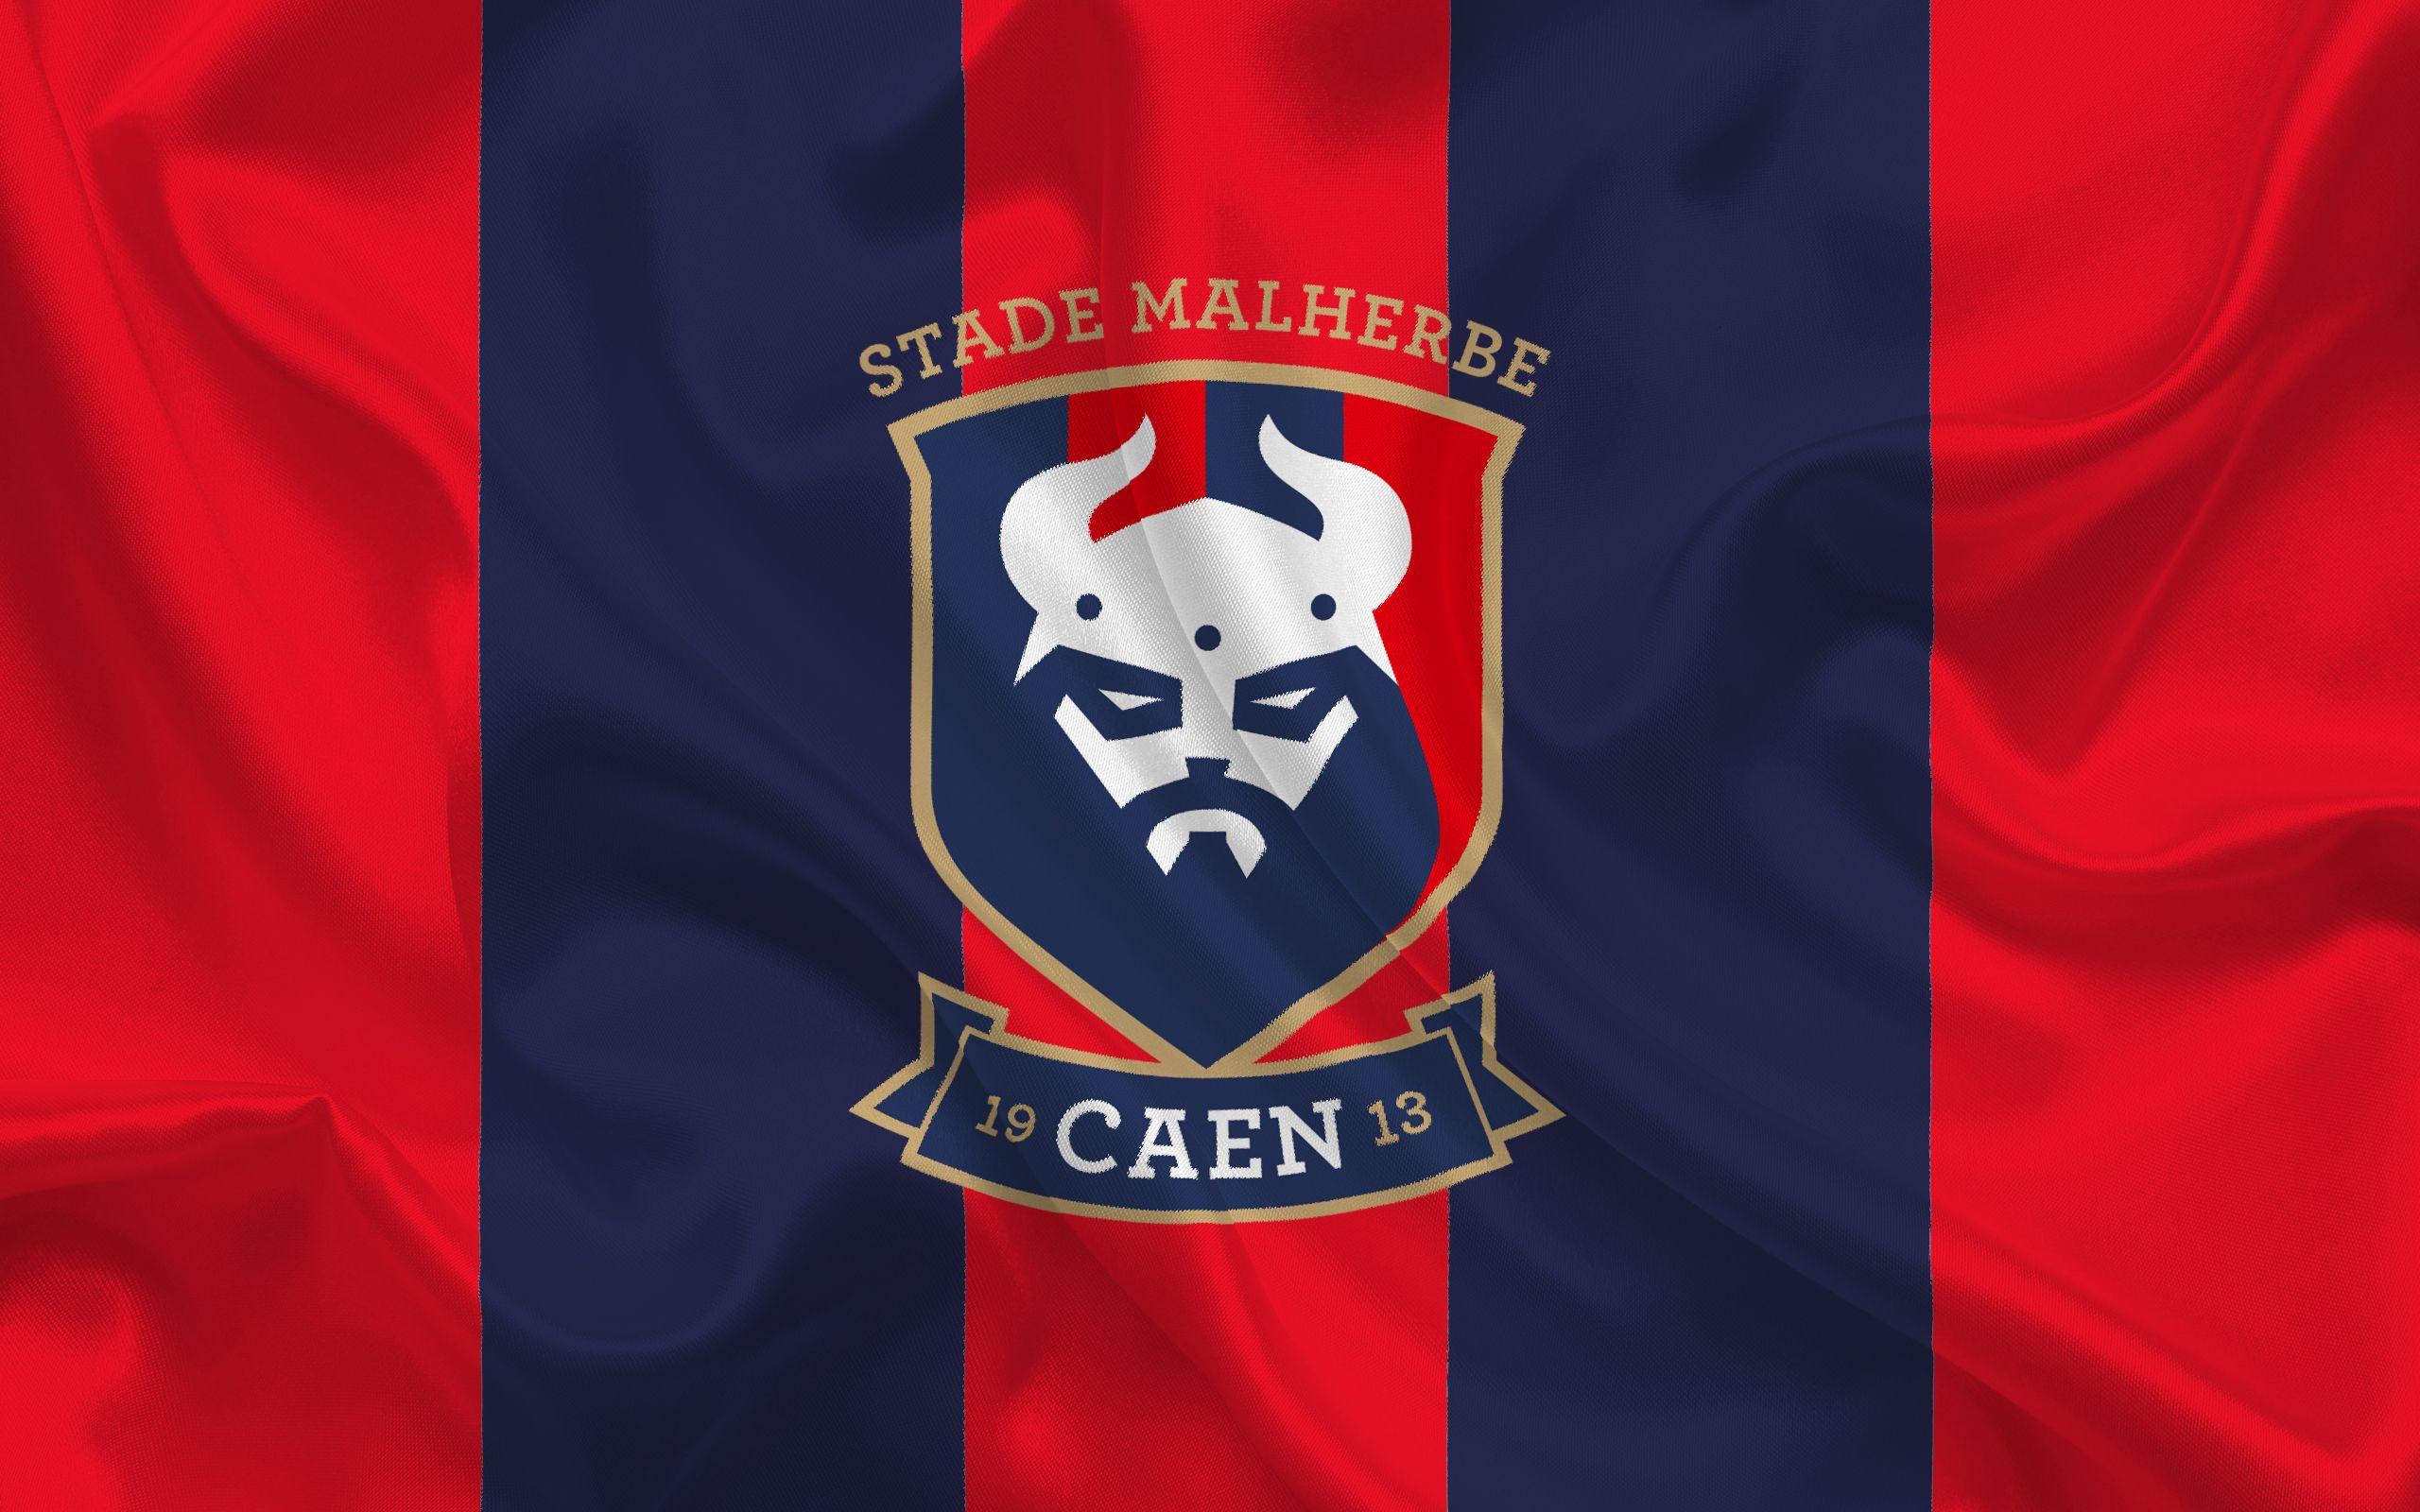 Download wallpaper Caen fc, Emblem, Caen logo, football club, Ligue